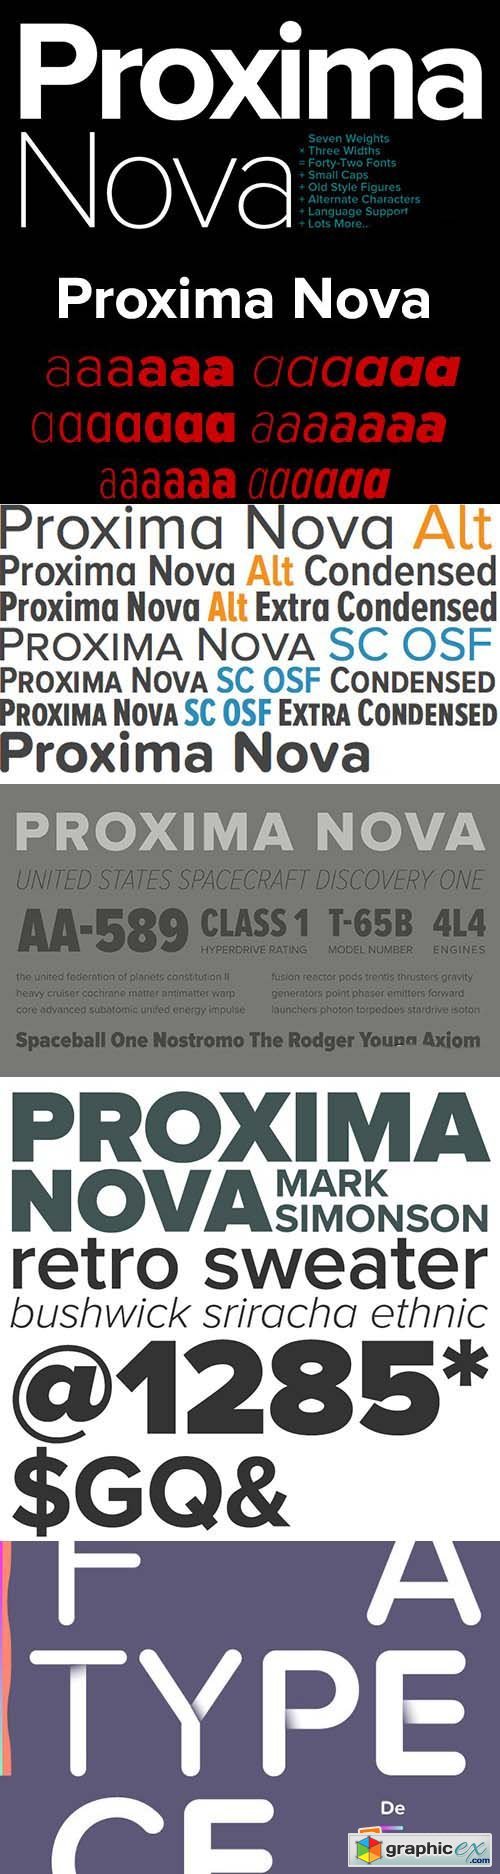 Proxima Nova Font Family - 87 Fonts